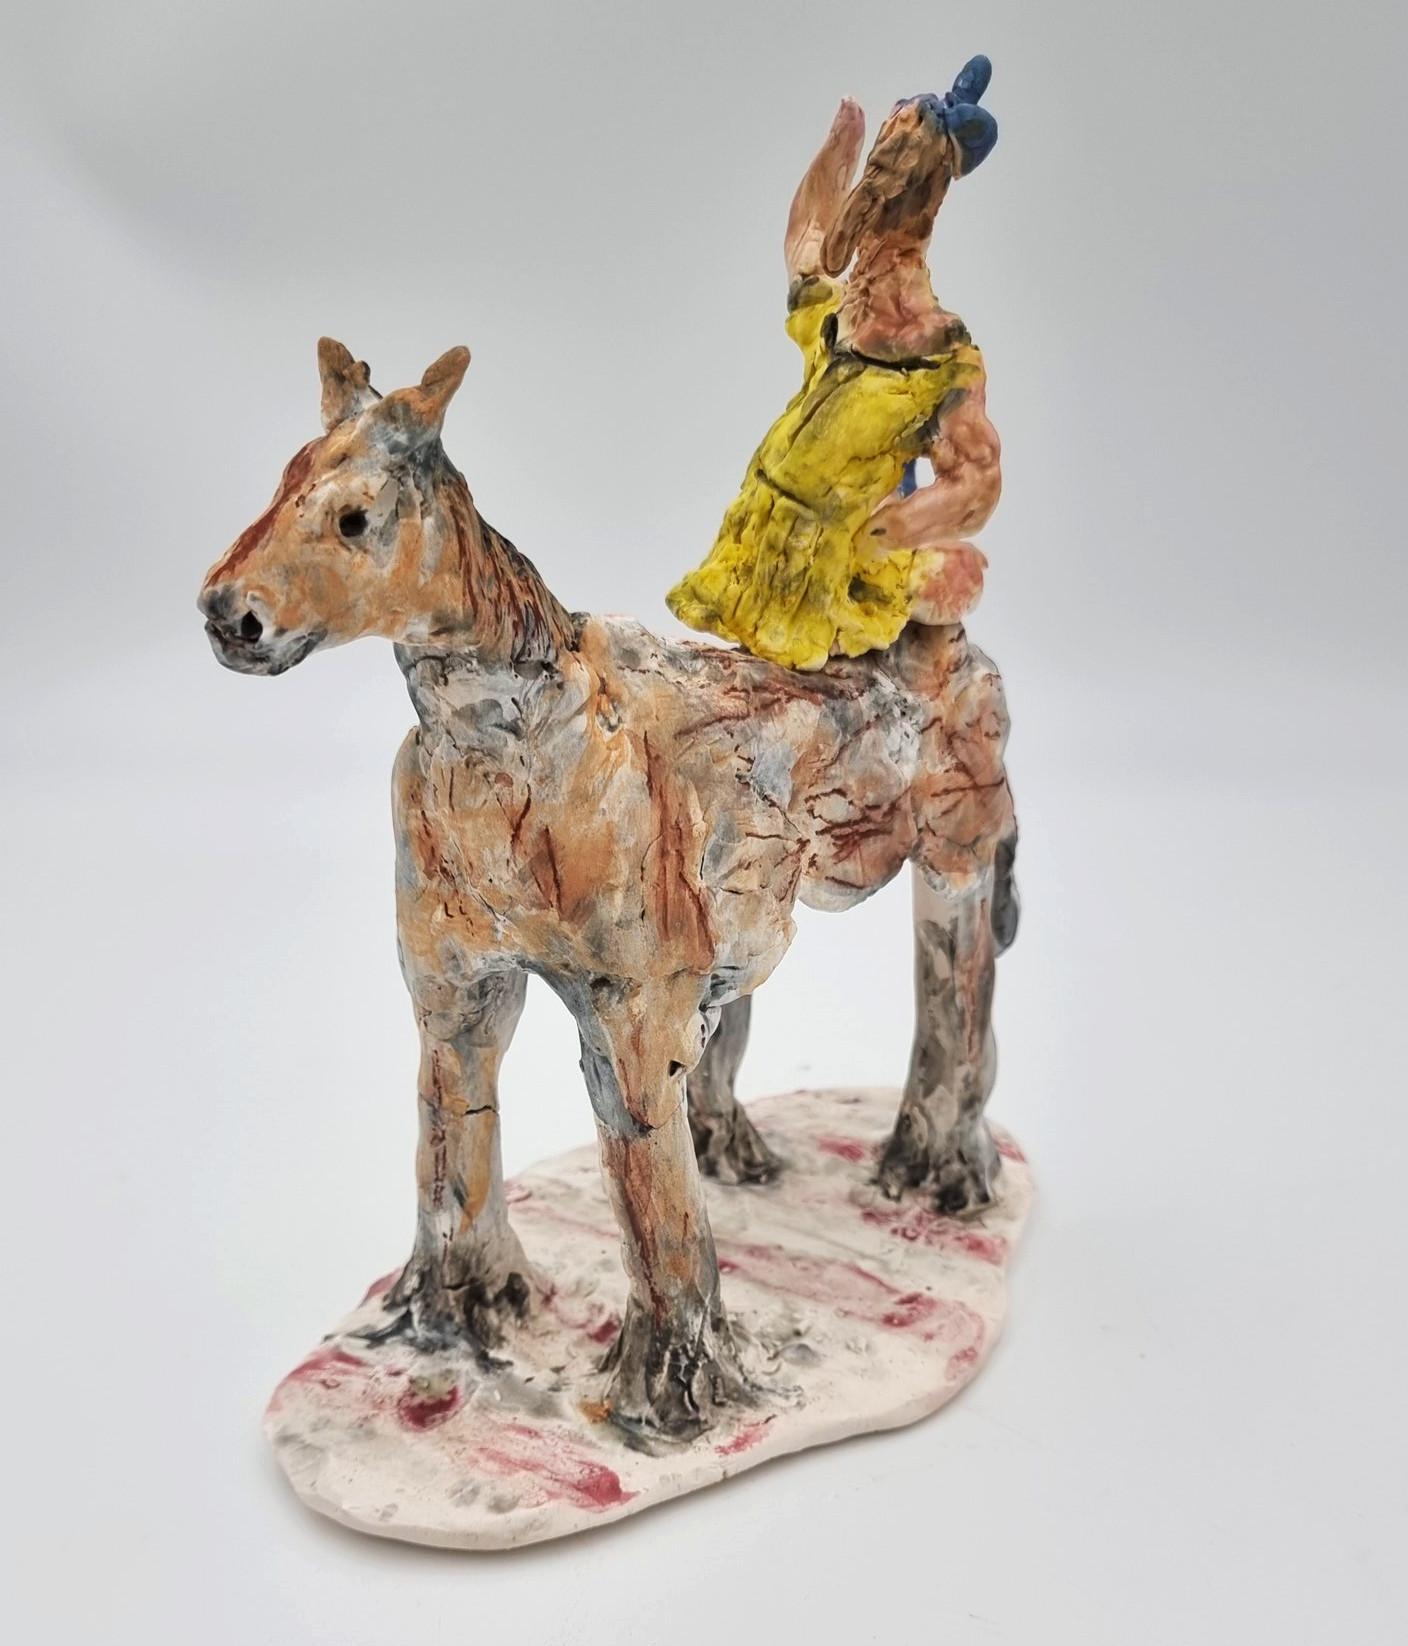 Female Acrobat on Horseback (Circus, Whimsical, Viola Frey, Delicate, Playful) - Sculpture by Ann Rothman